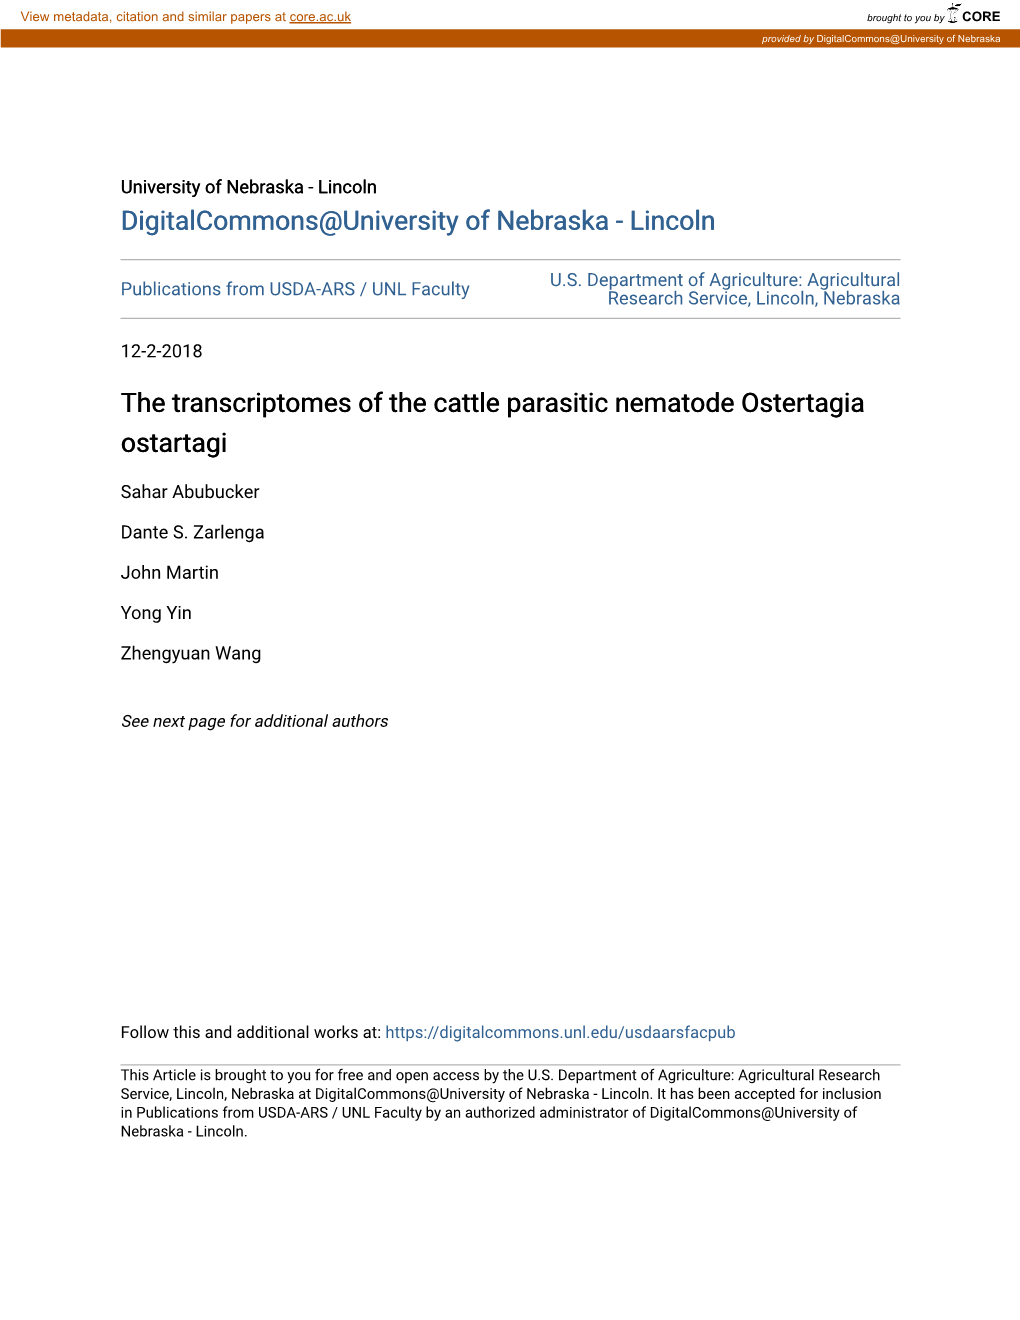 The Transcriptomes of the Cattle Parasitic Nematode Ostertagia Ostartagi